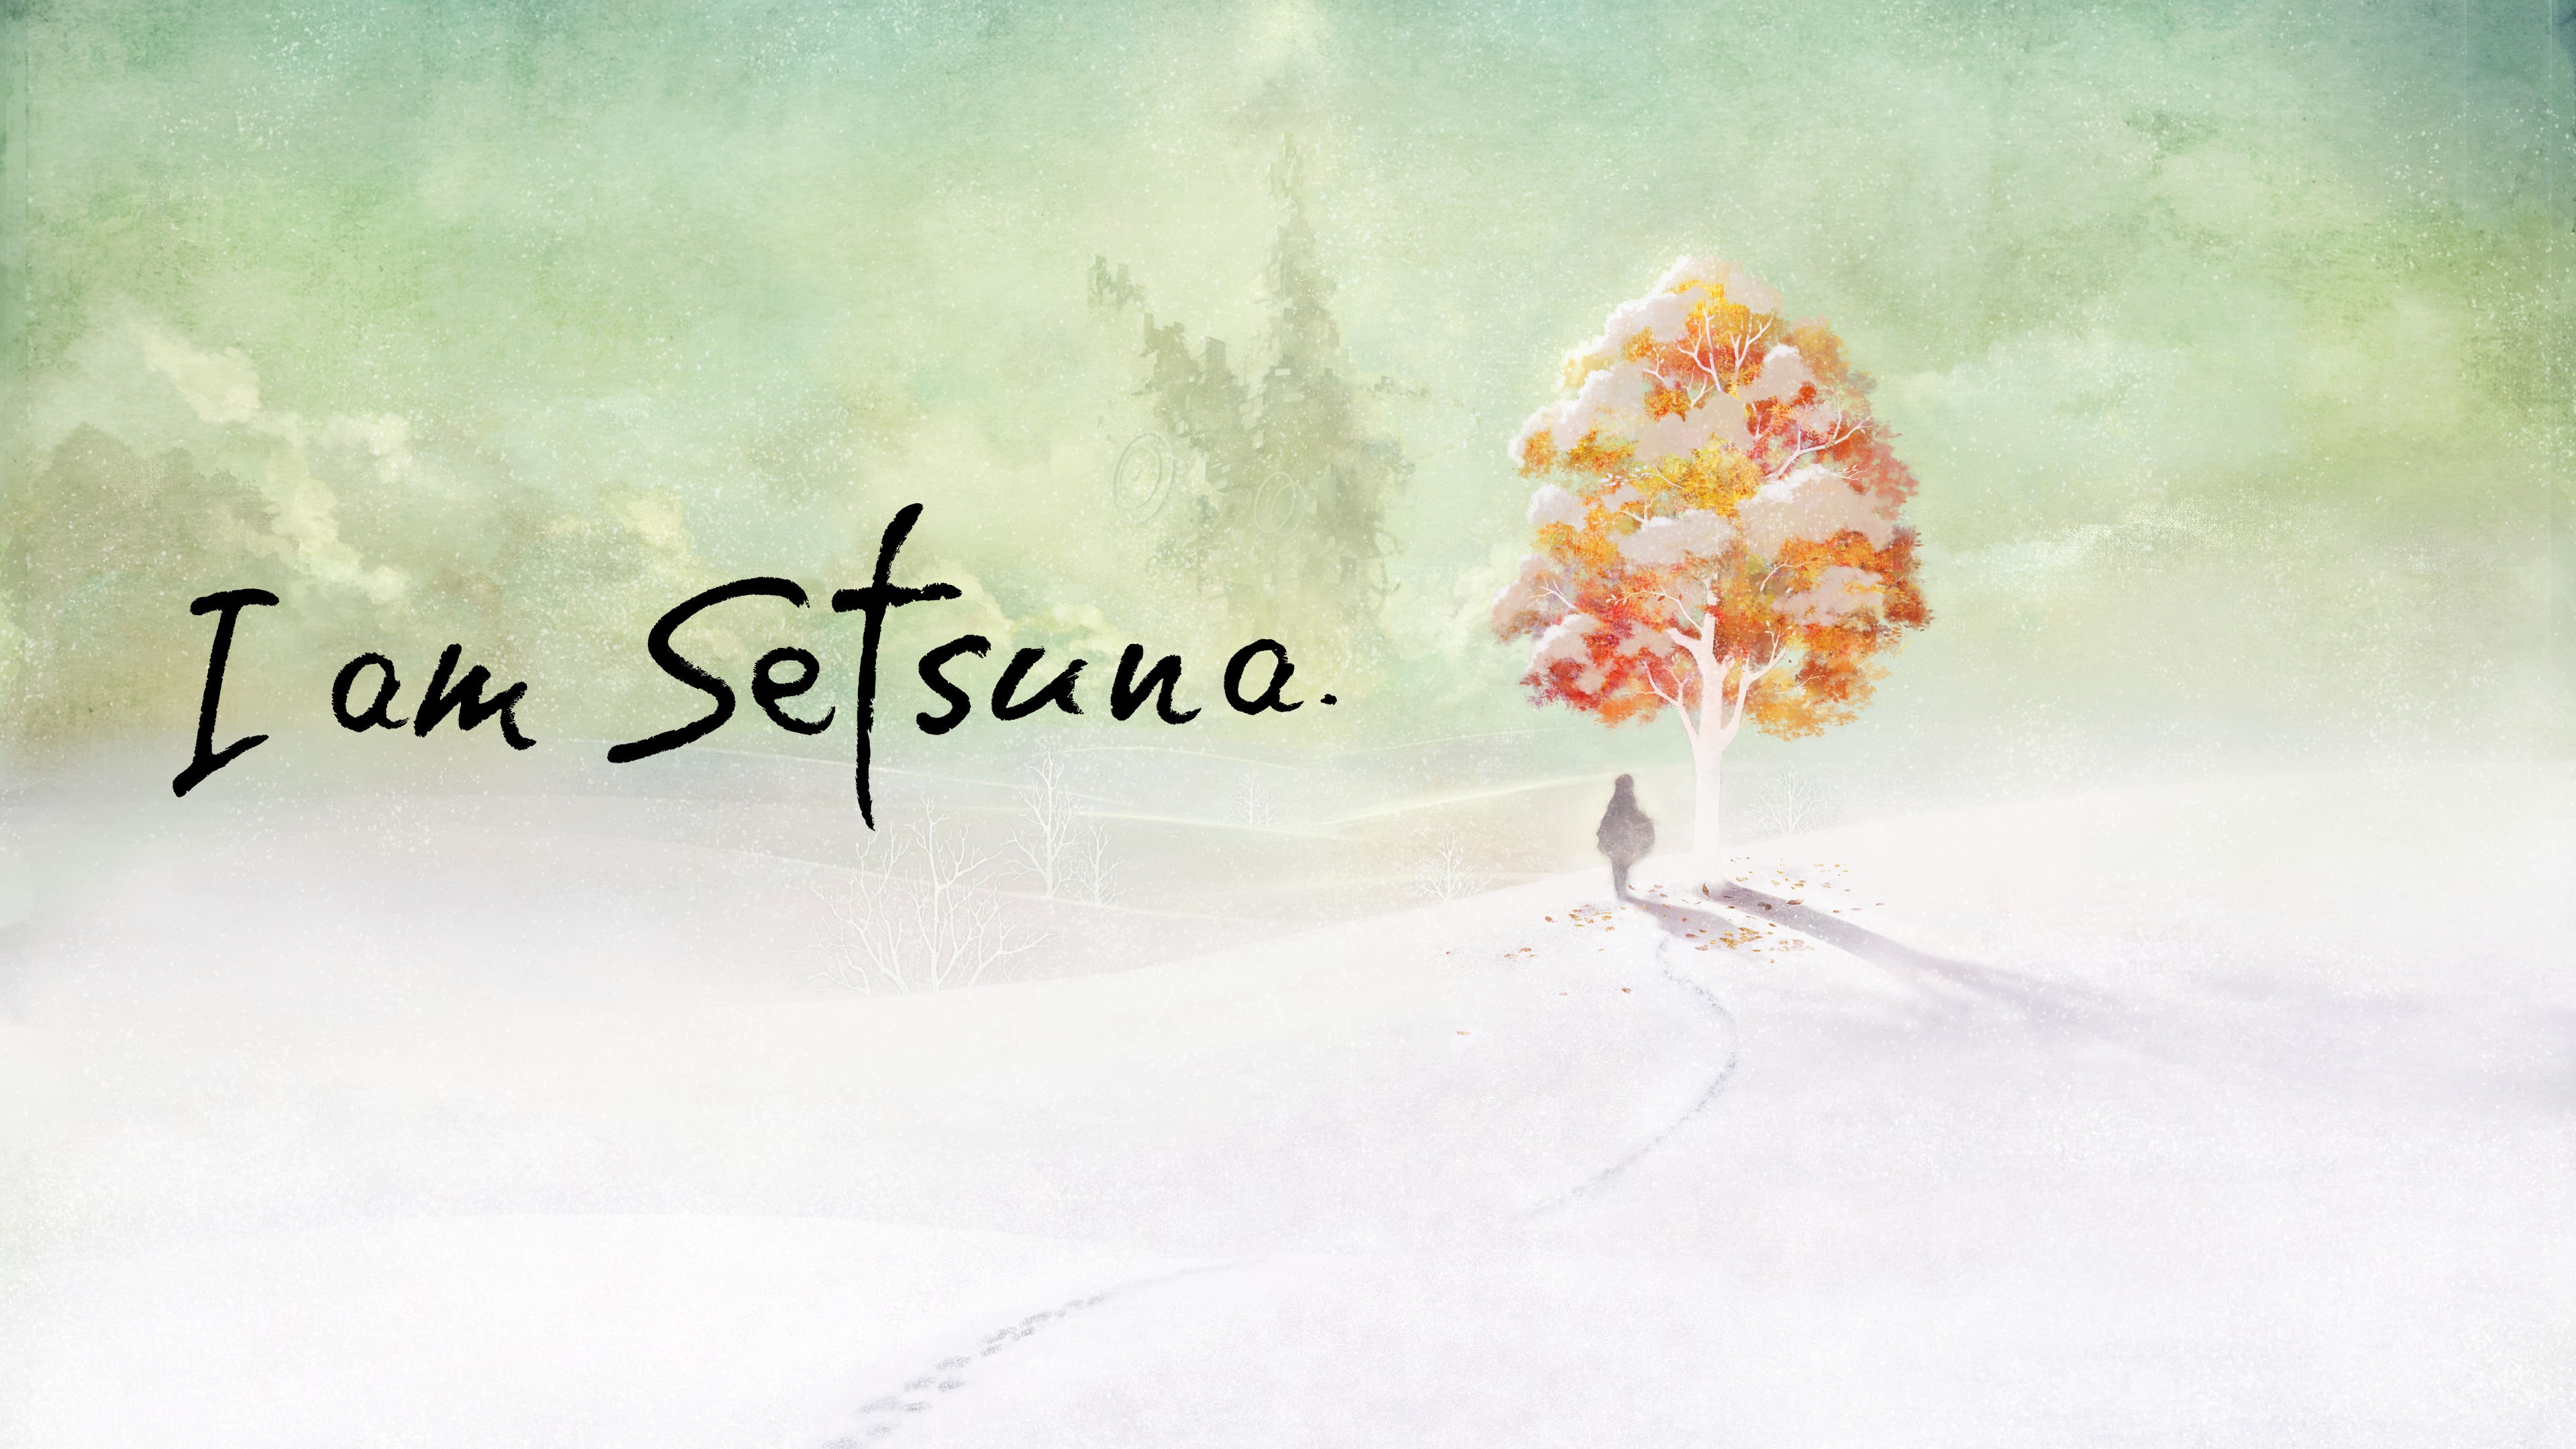 I Am Setsuna (English, Korean, Japanese, Traditional Chinese)